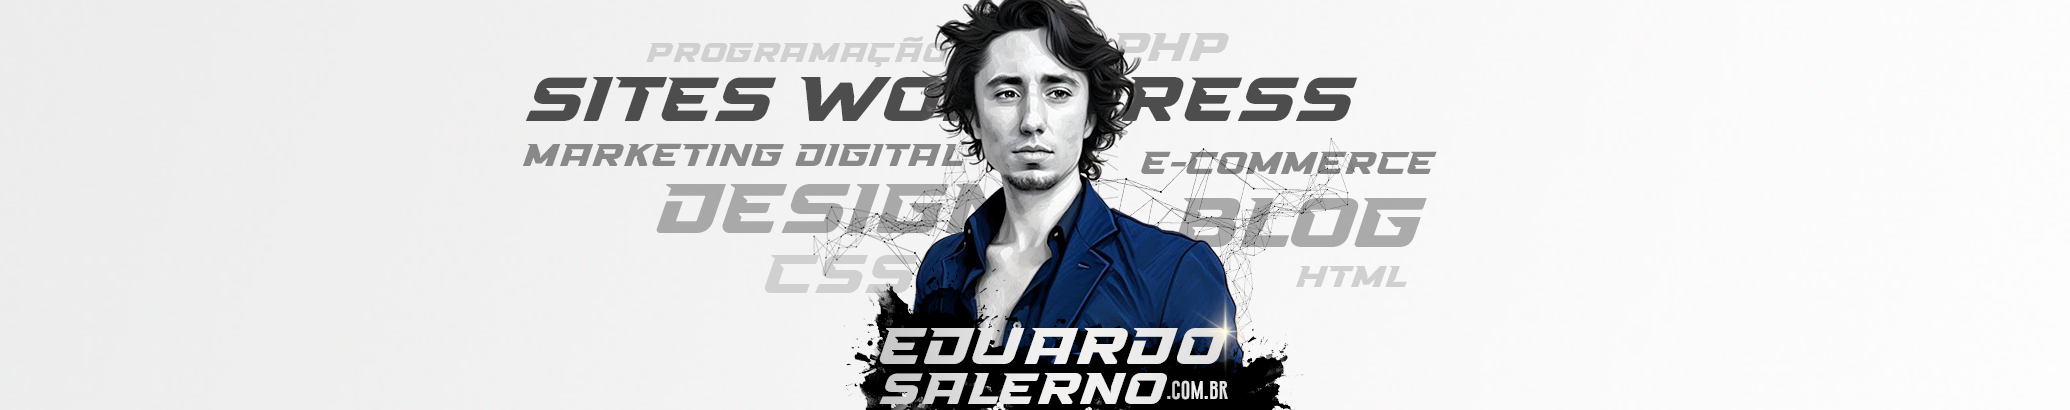 Eduardo Salerno's profile banner